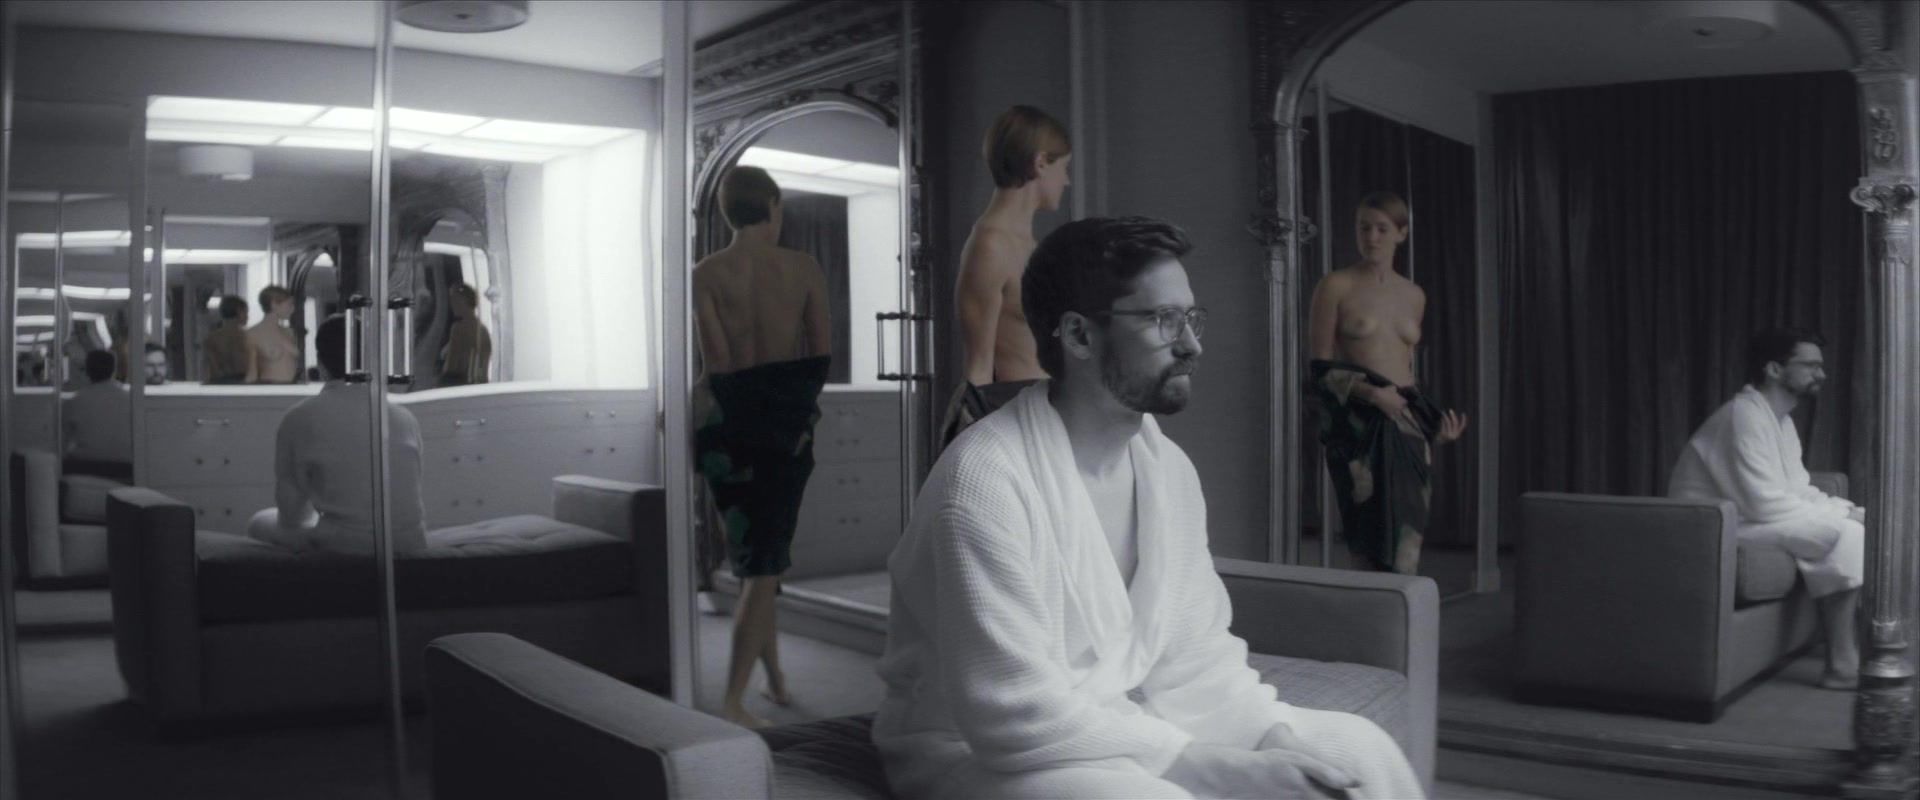 Great Fuck Celebrity nude scene | Alexia Rasmussen, Nora Zehetner nude - Creative Control (2015) Gorgeous - 1